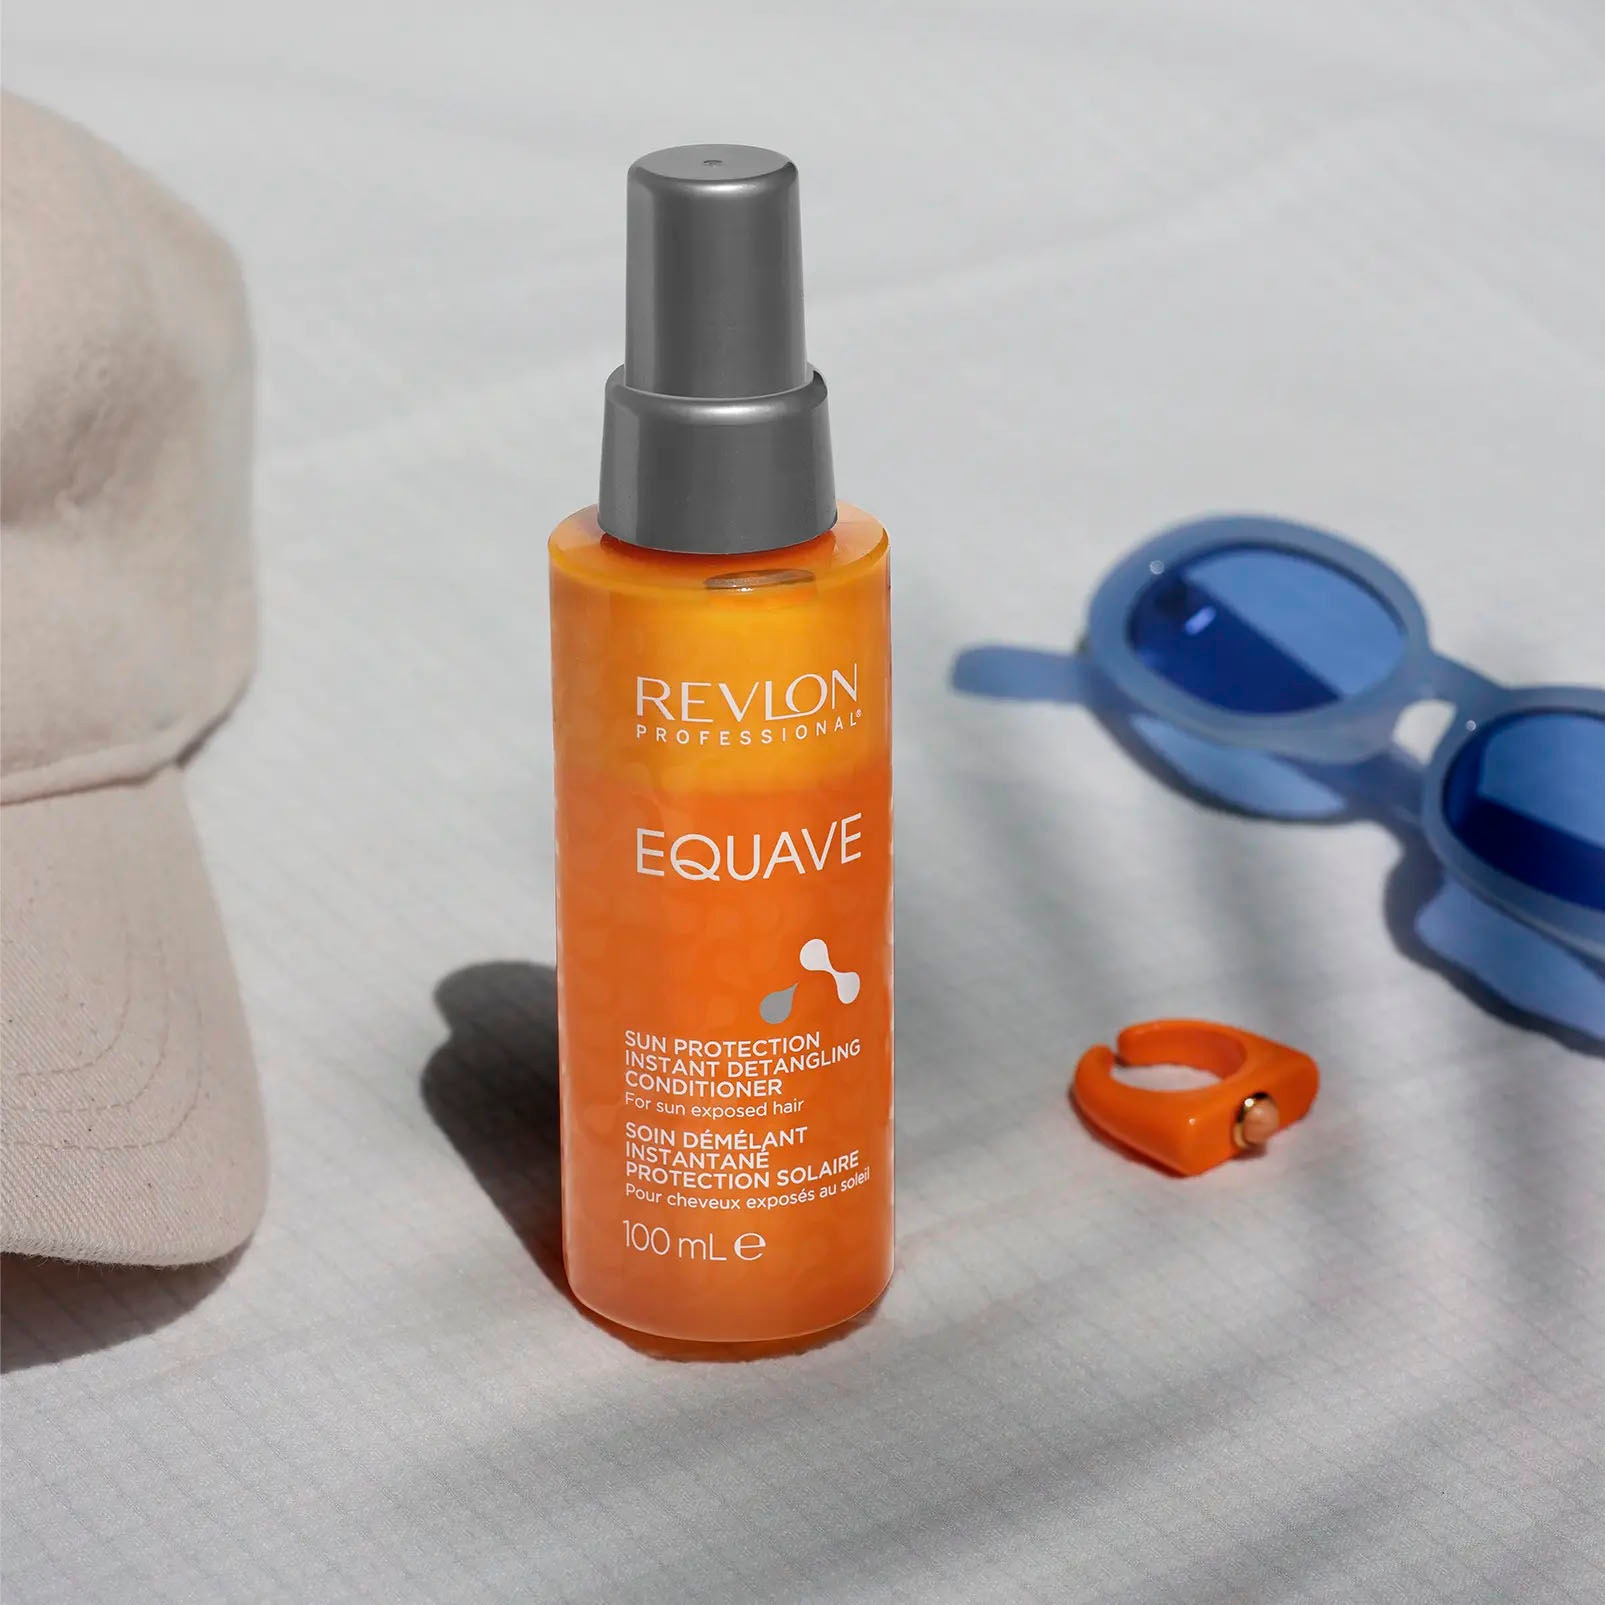 REVLON PROFESSIONAL Haarspülung »Leave-in Pflege Equave Sun Protection Instant Detangling Conditioner«, Alle Haartypen 100 ml